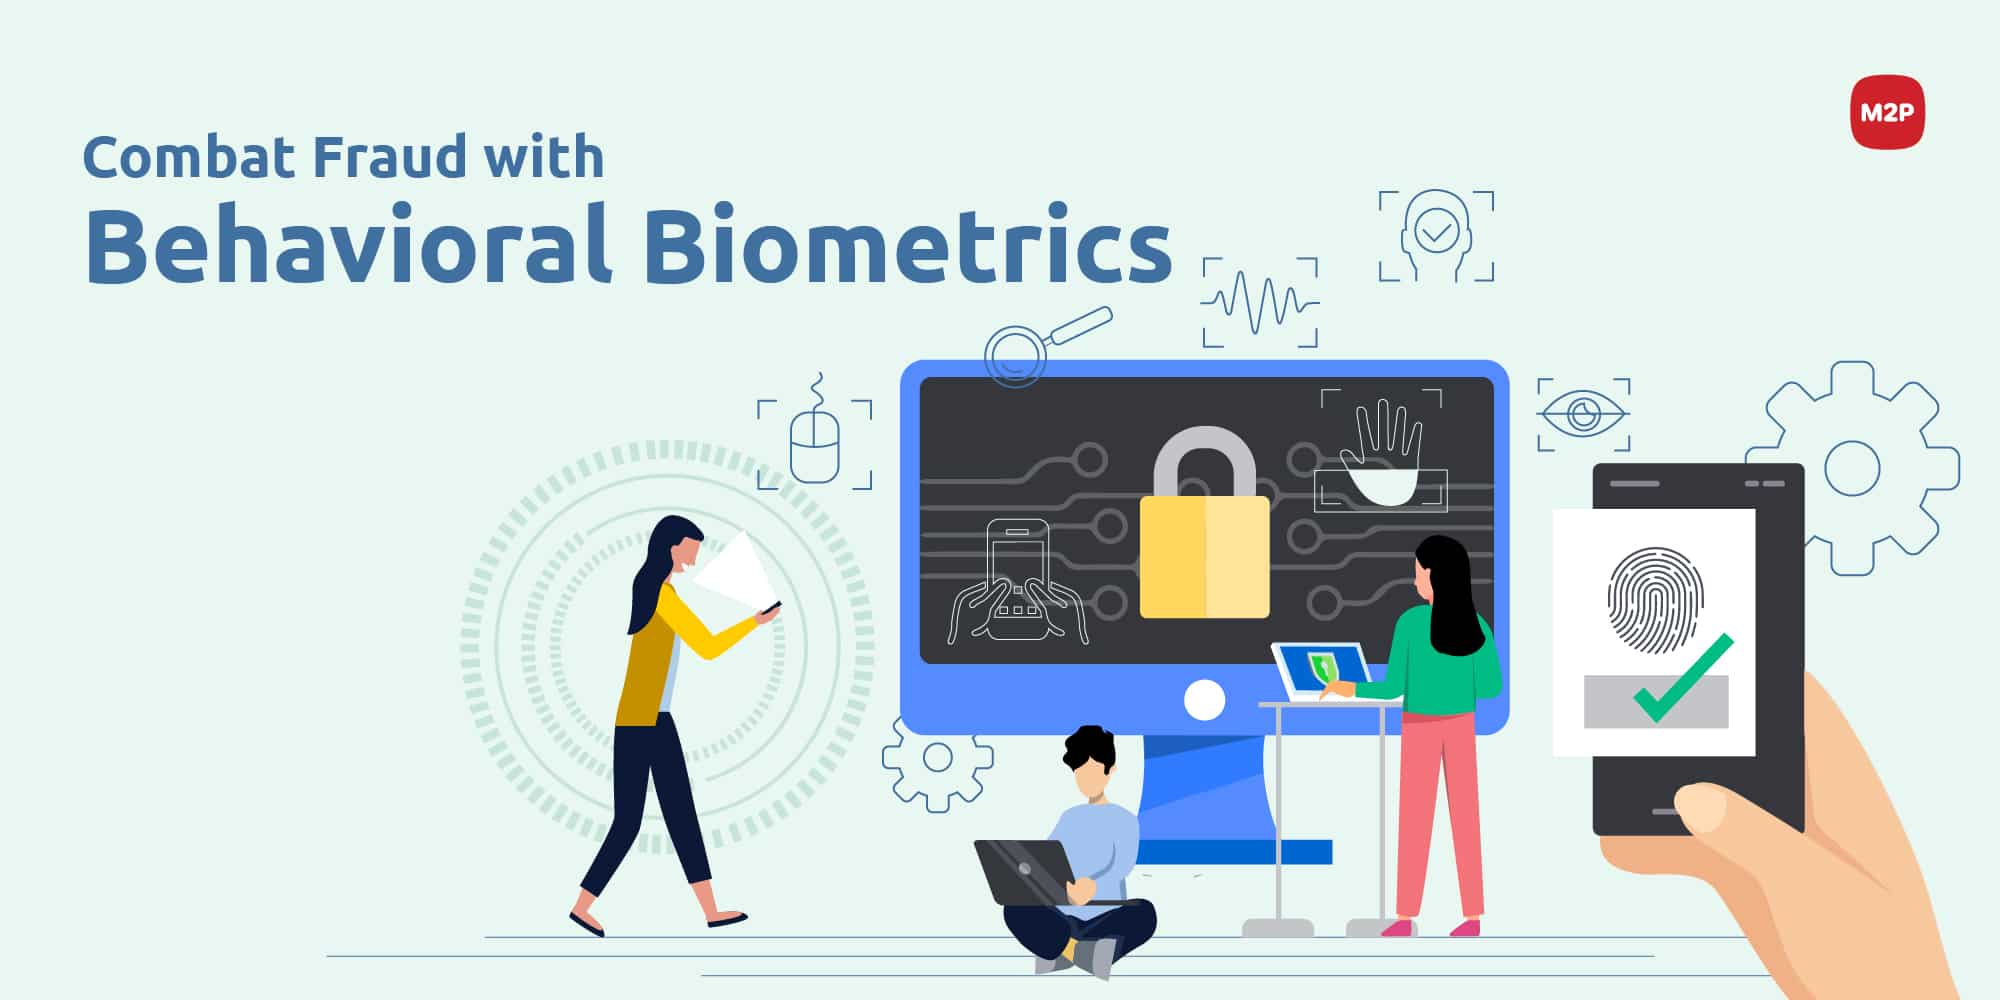 Behavioral biometrics